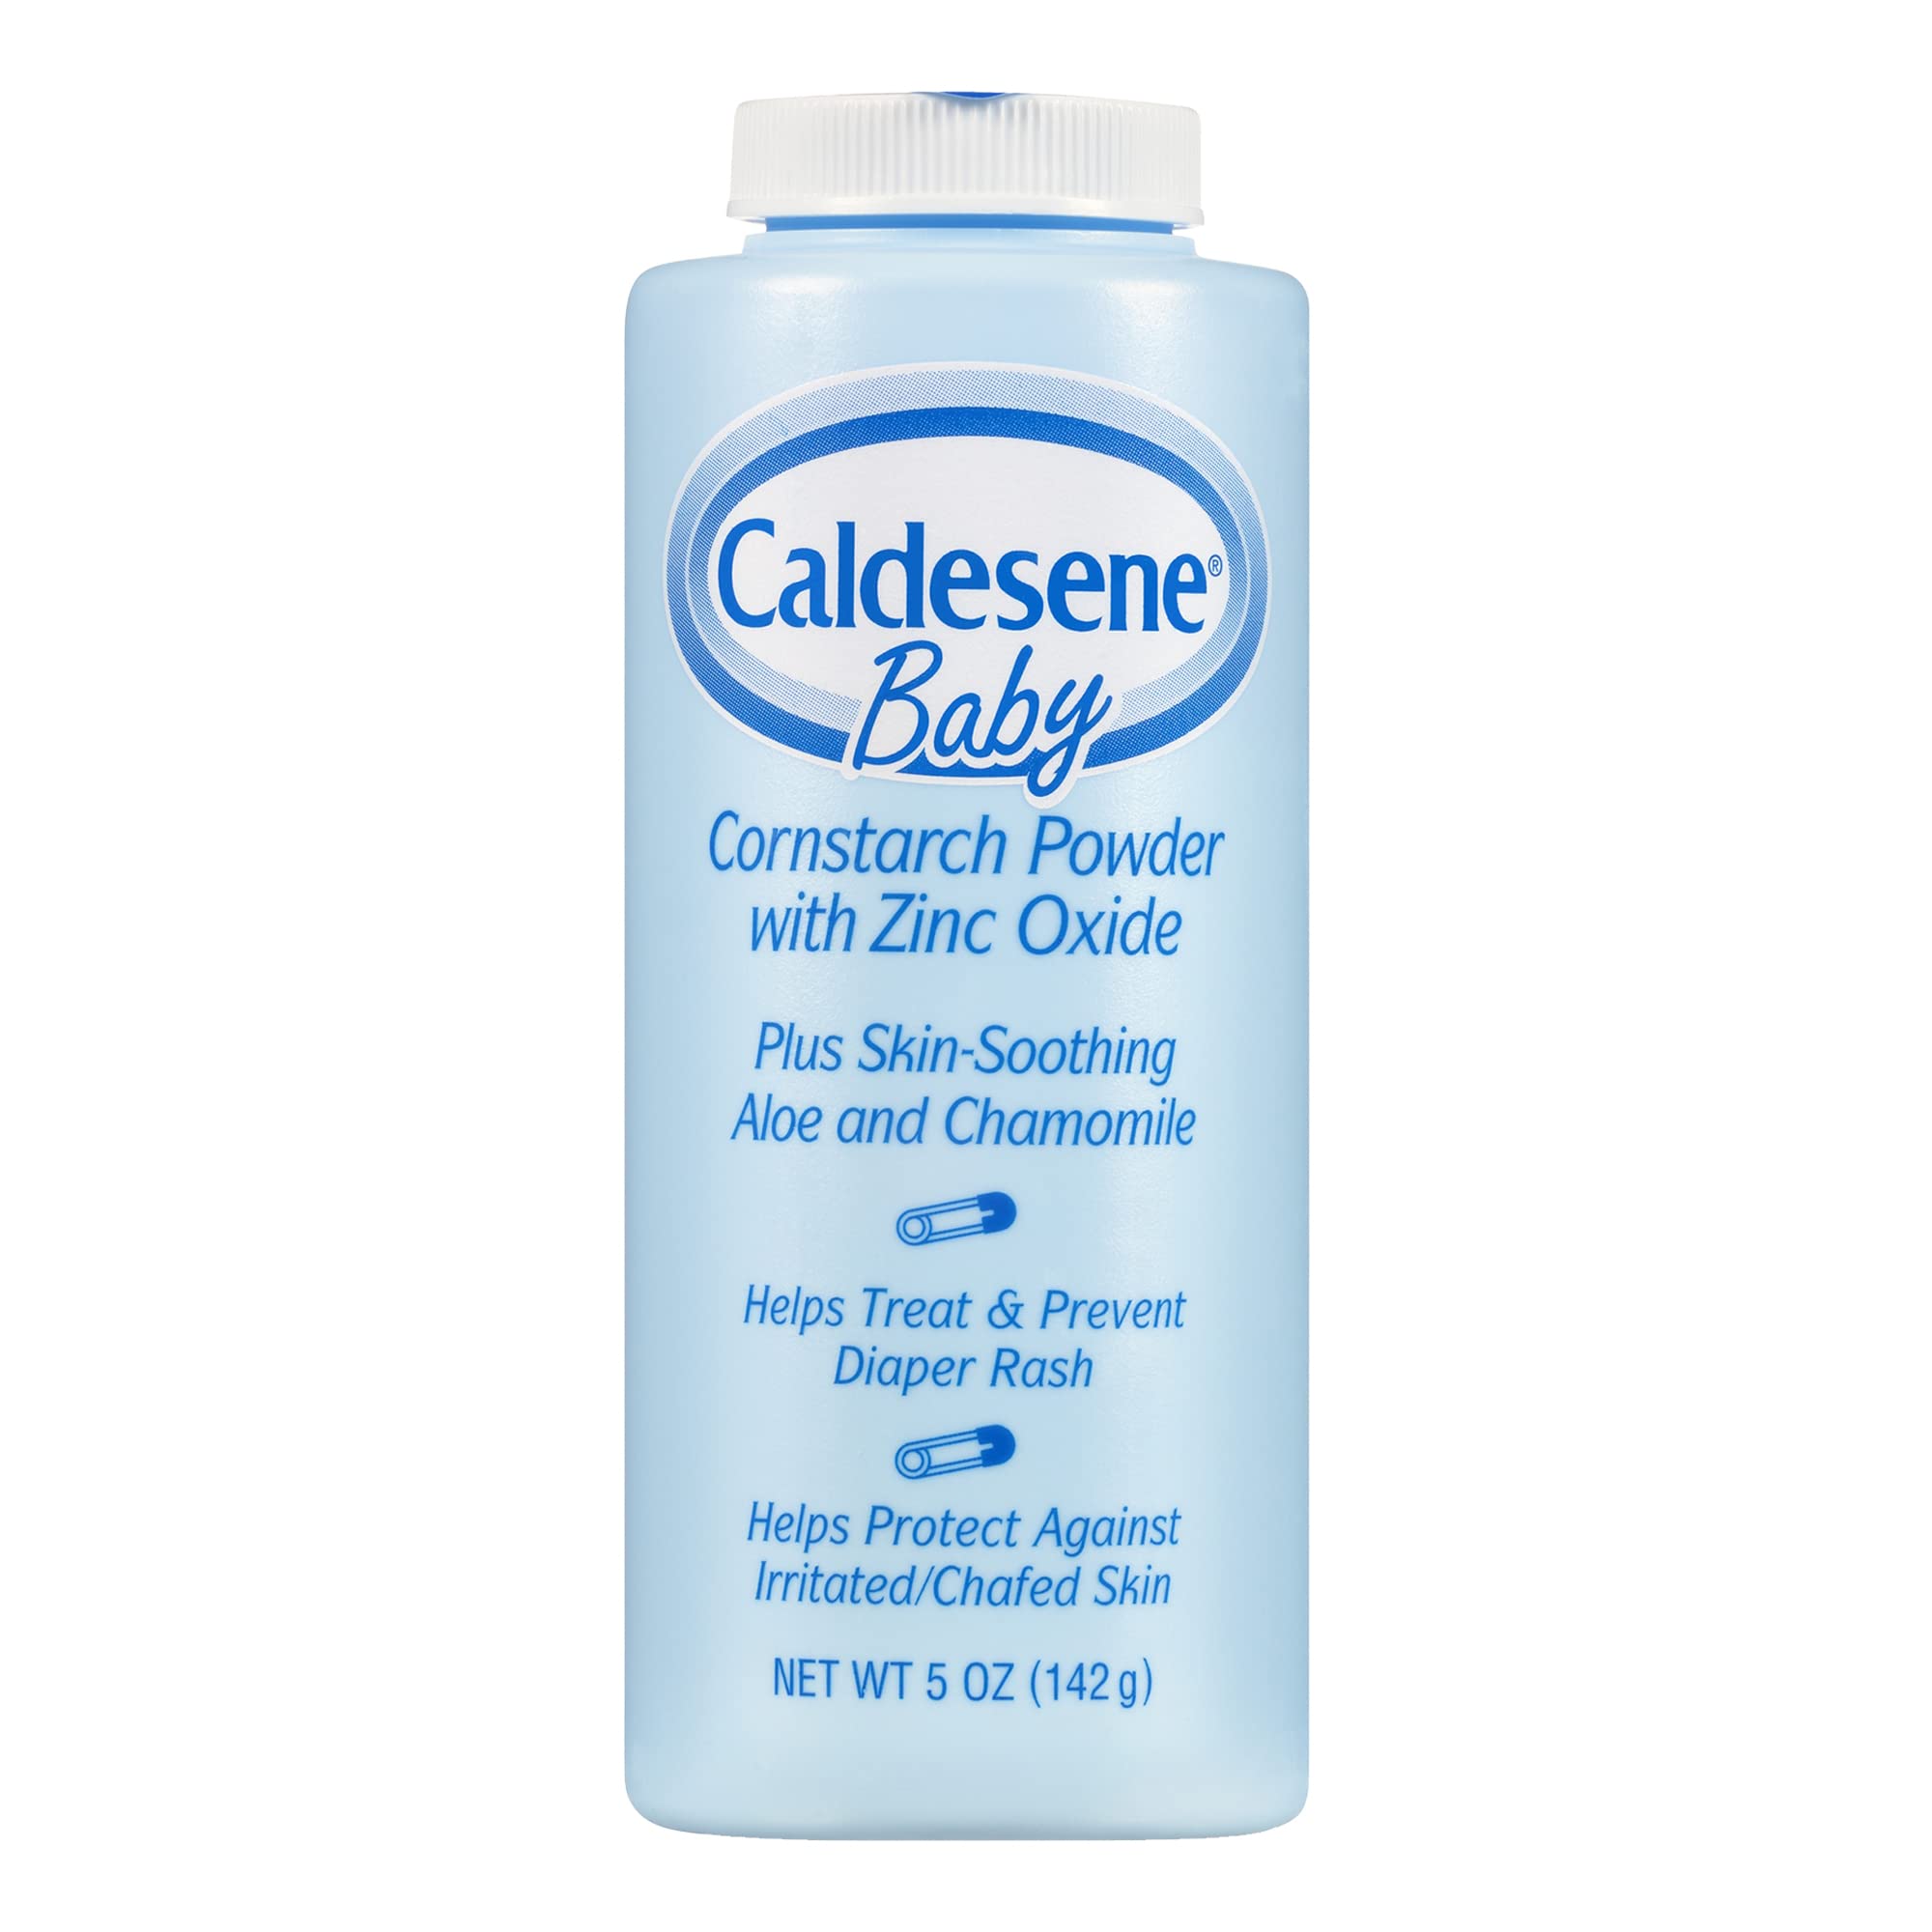 Caldesene Baby Cornstarch Powder with Zinc Oxide, 5 oz